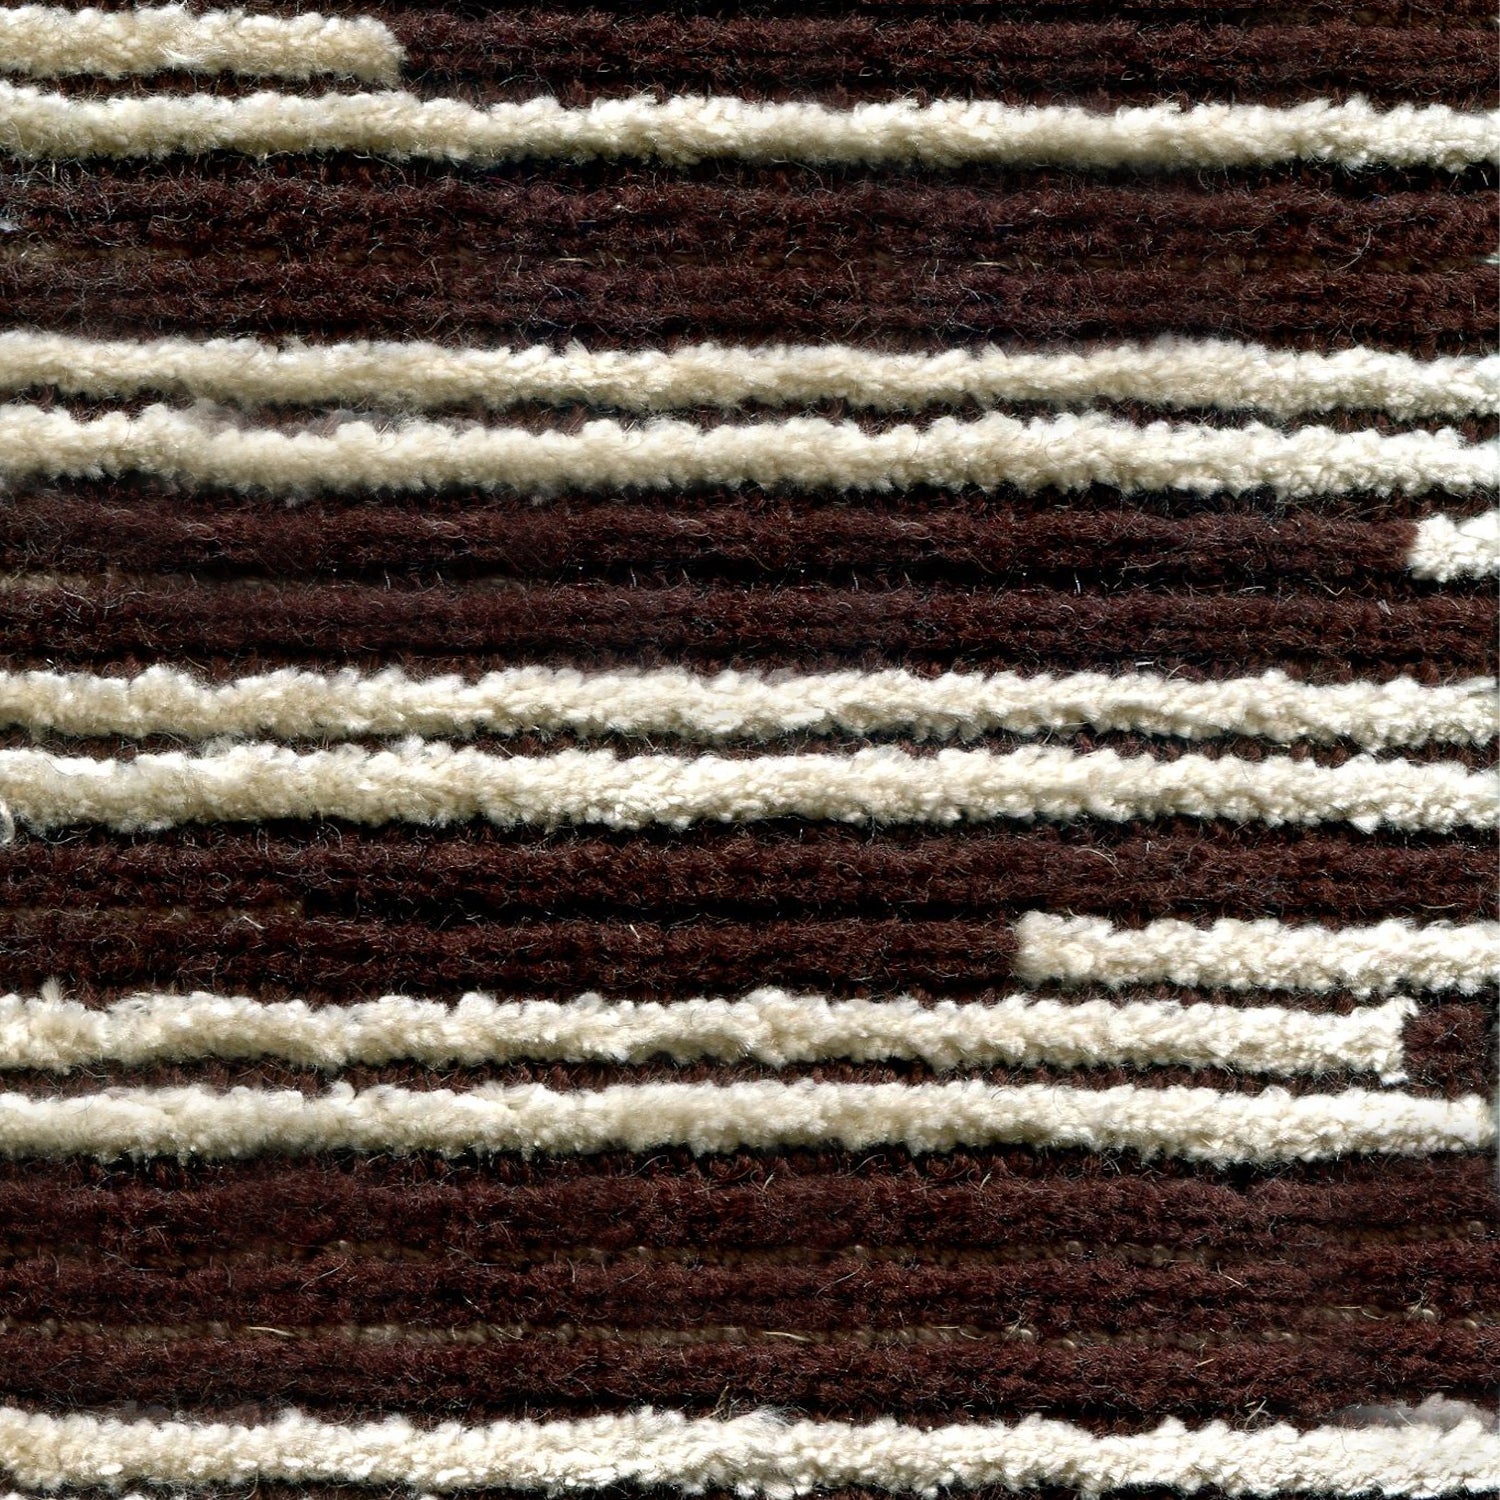 Wool-silk broadloom carpet swatch in a dimensional broken stripe pattern in cream and brown.